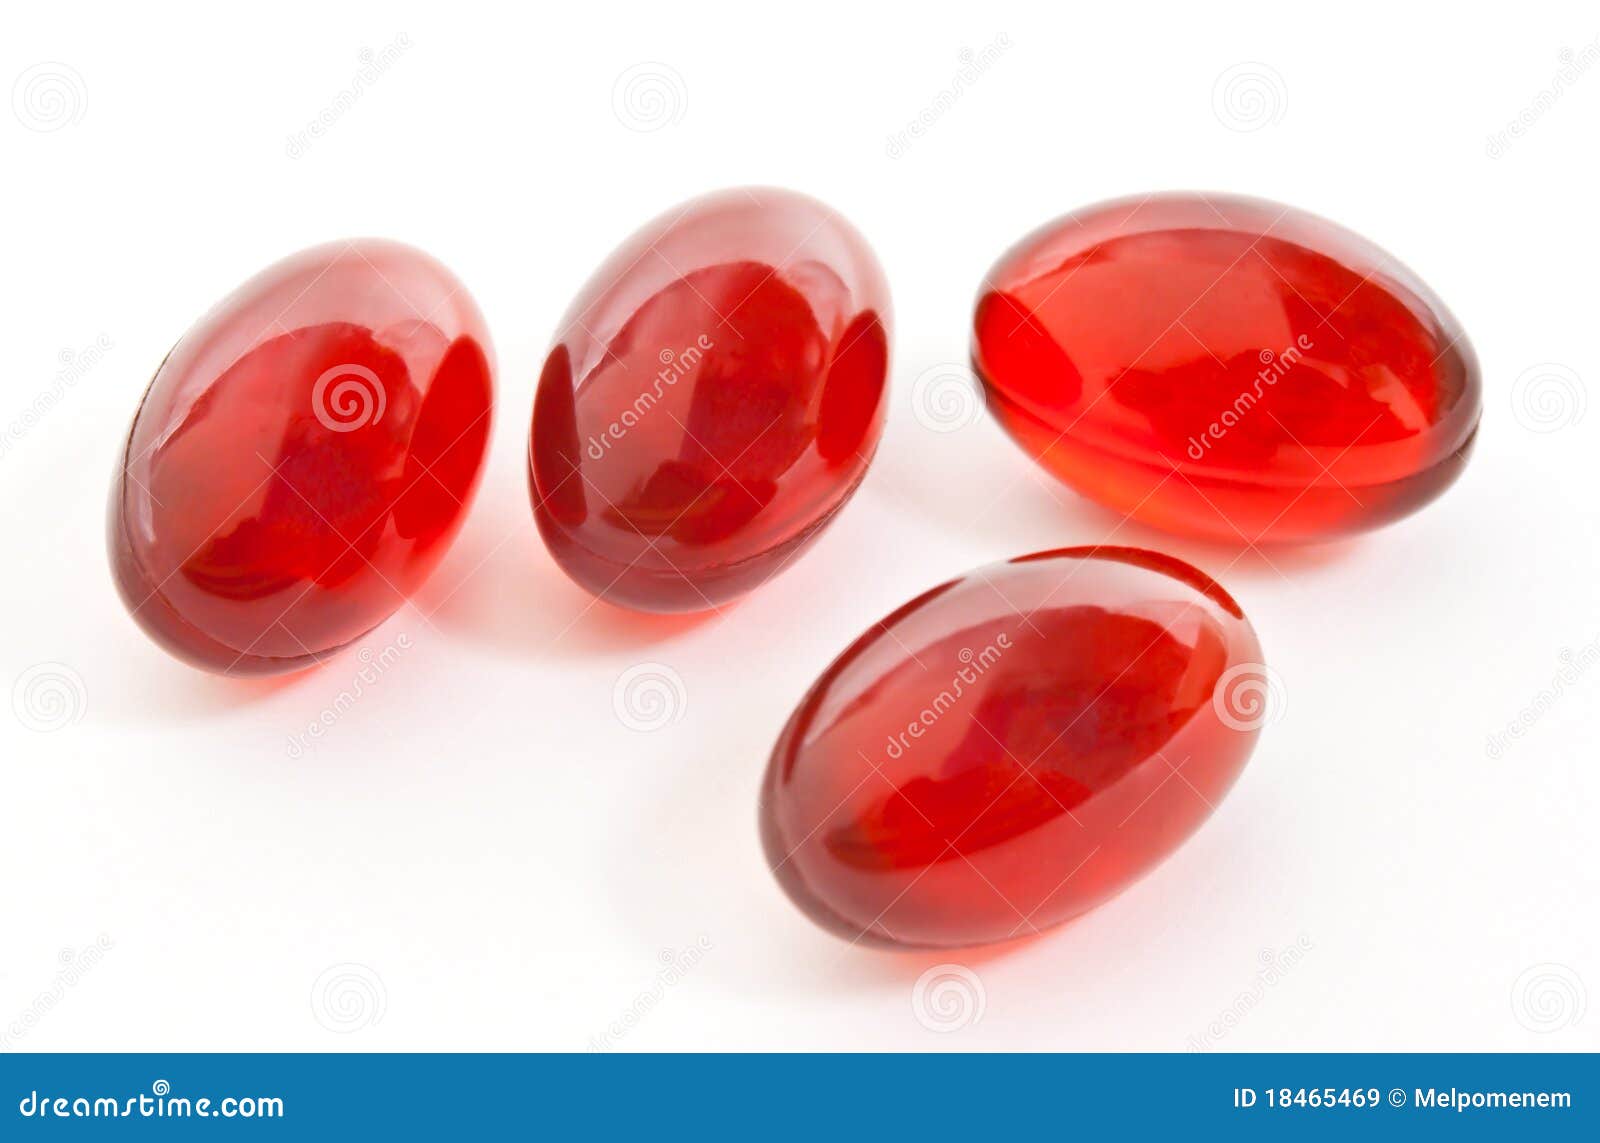 red gel capsules